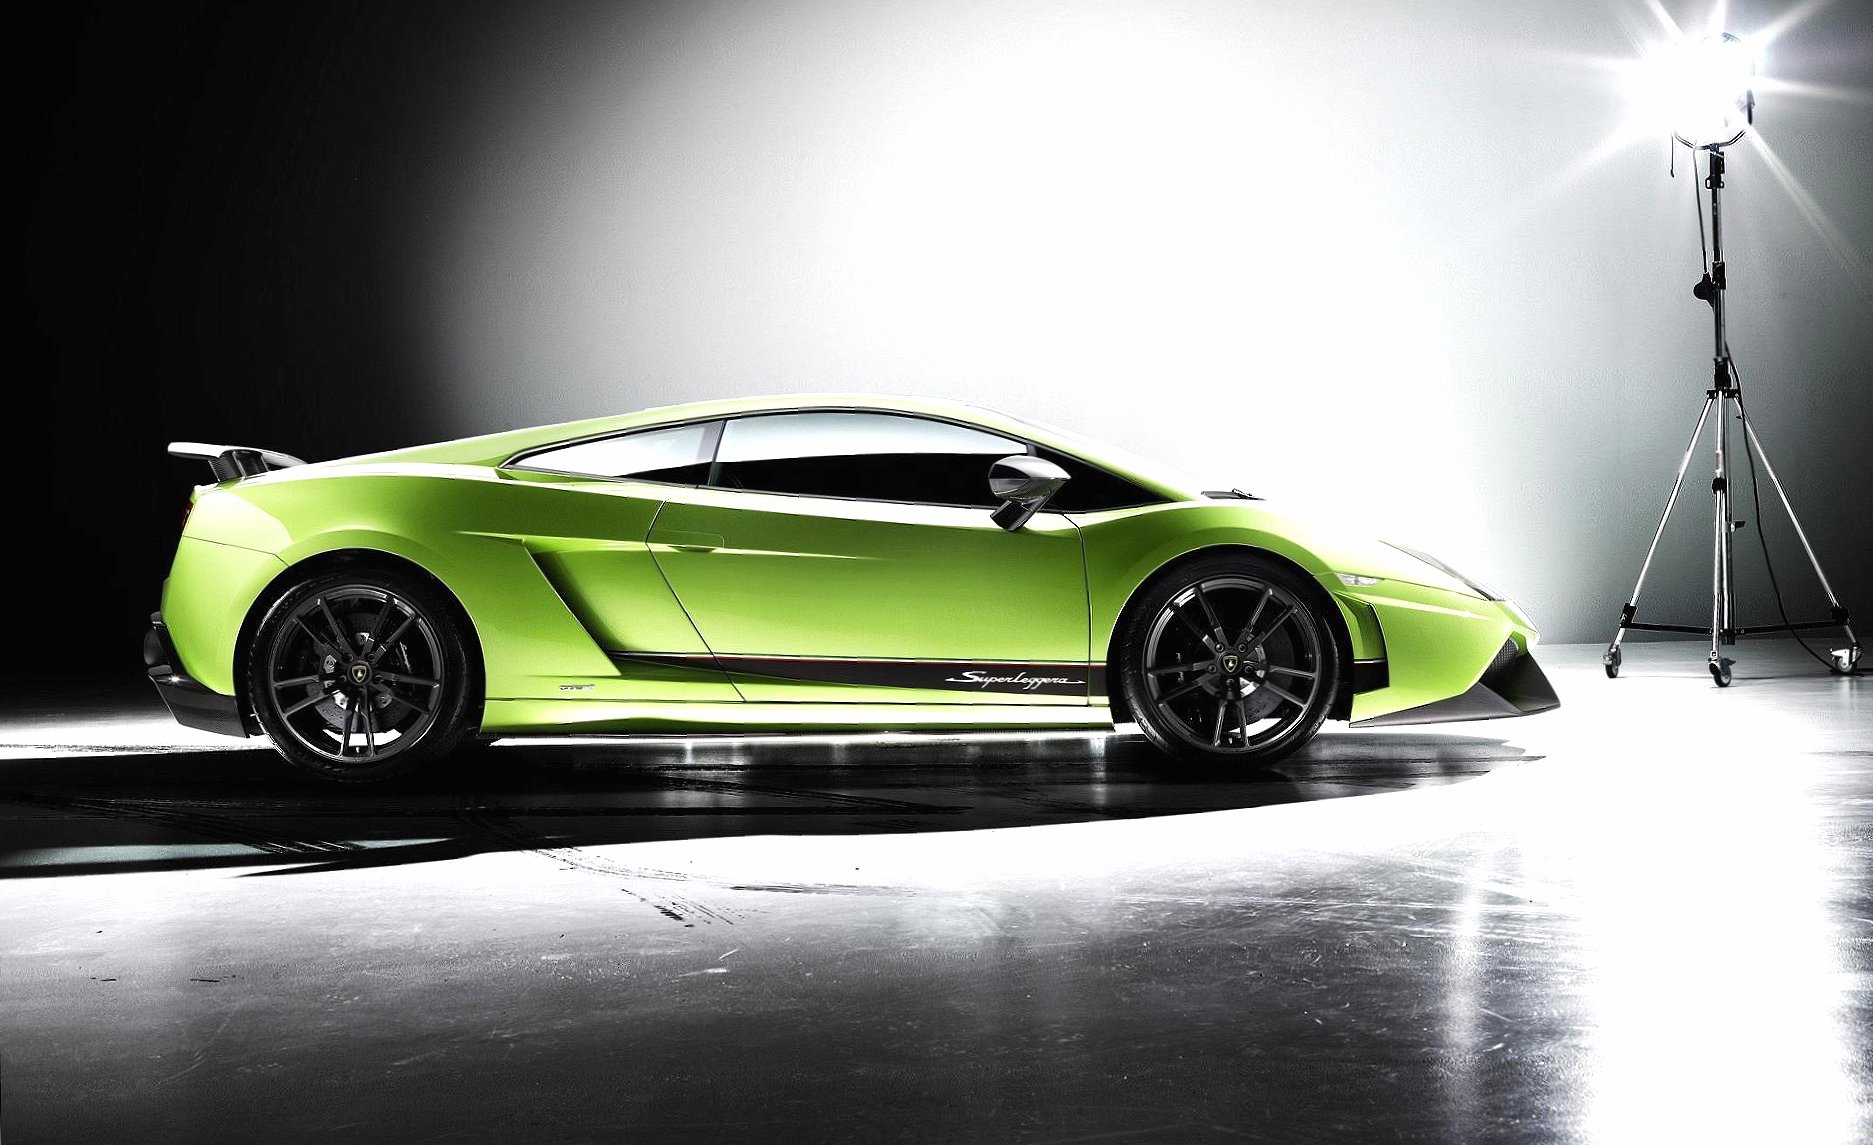 Lamborghini gallardo lp 570 4 superleggera at 1334 x 750 iPhone 7 size wallpapers HD quality